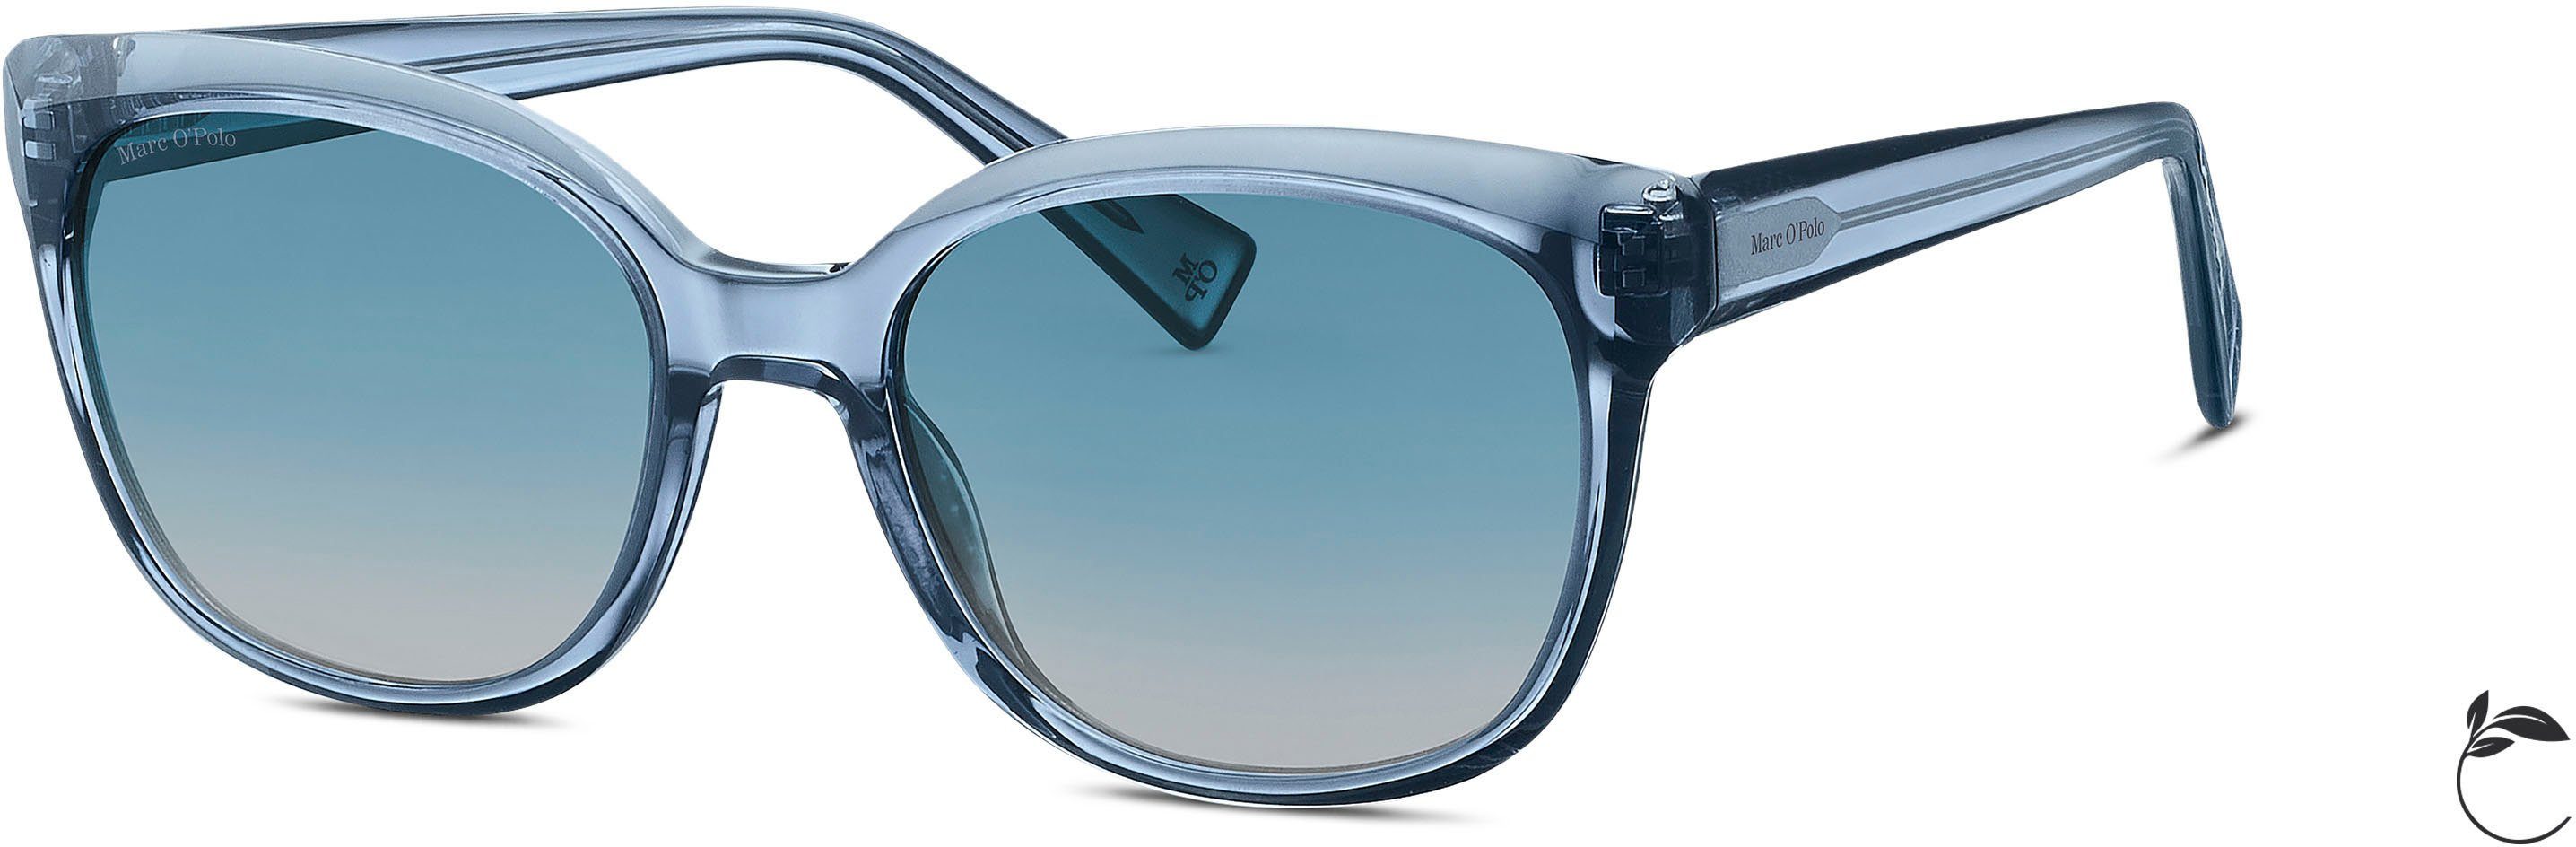 Marc O'Polo Sonnenbrille Modell 506196 Karree-Form hellblau